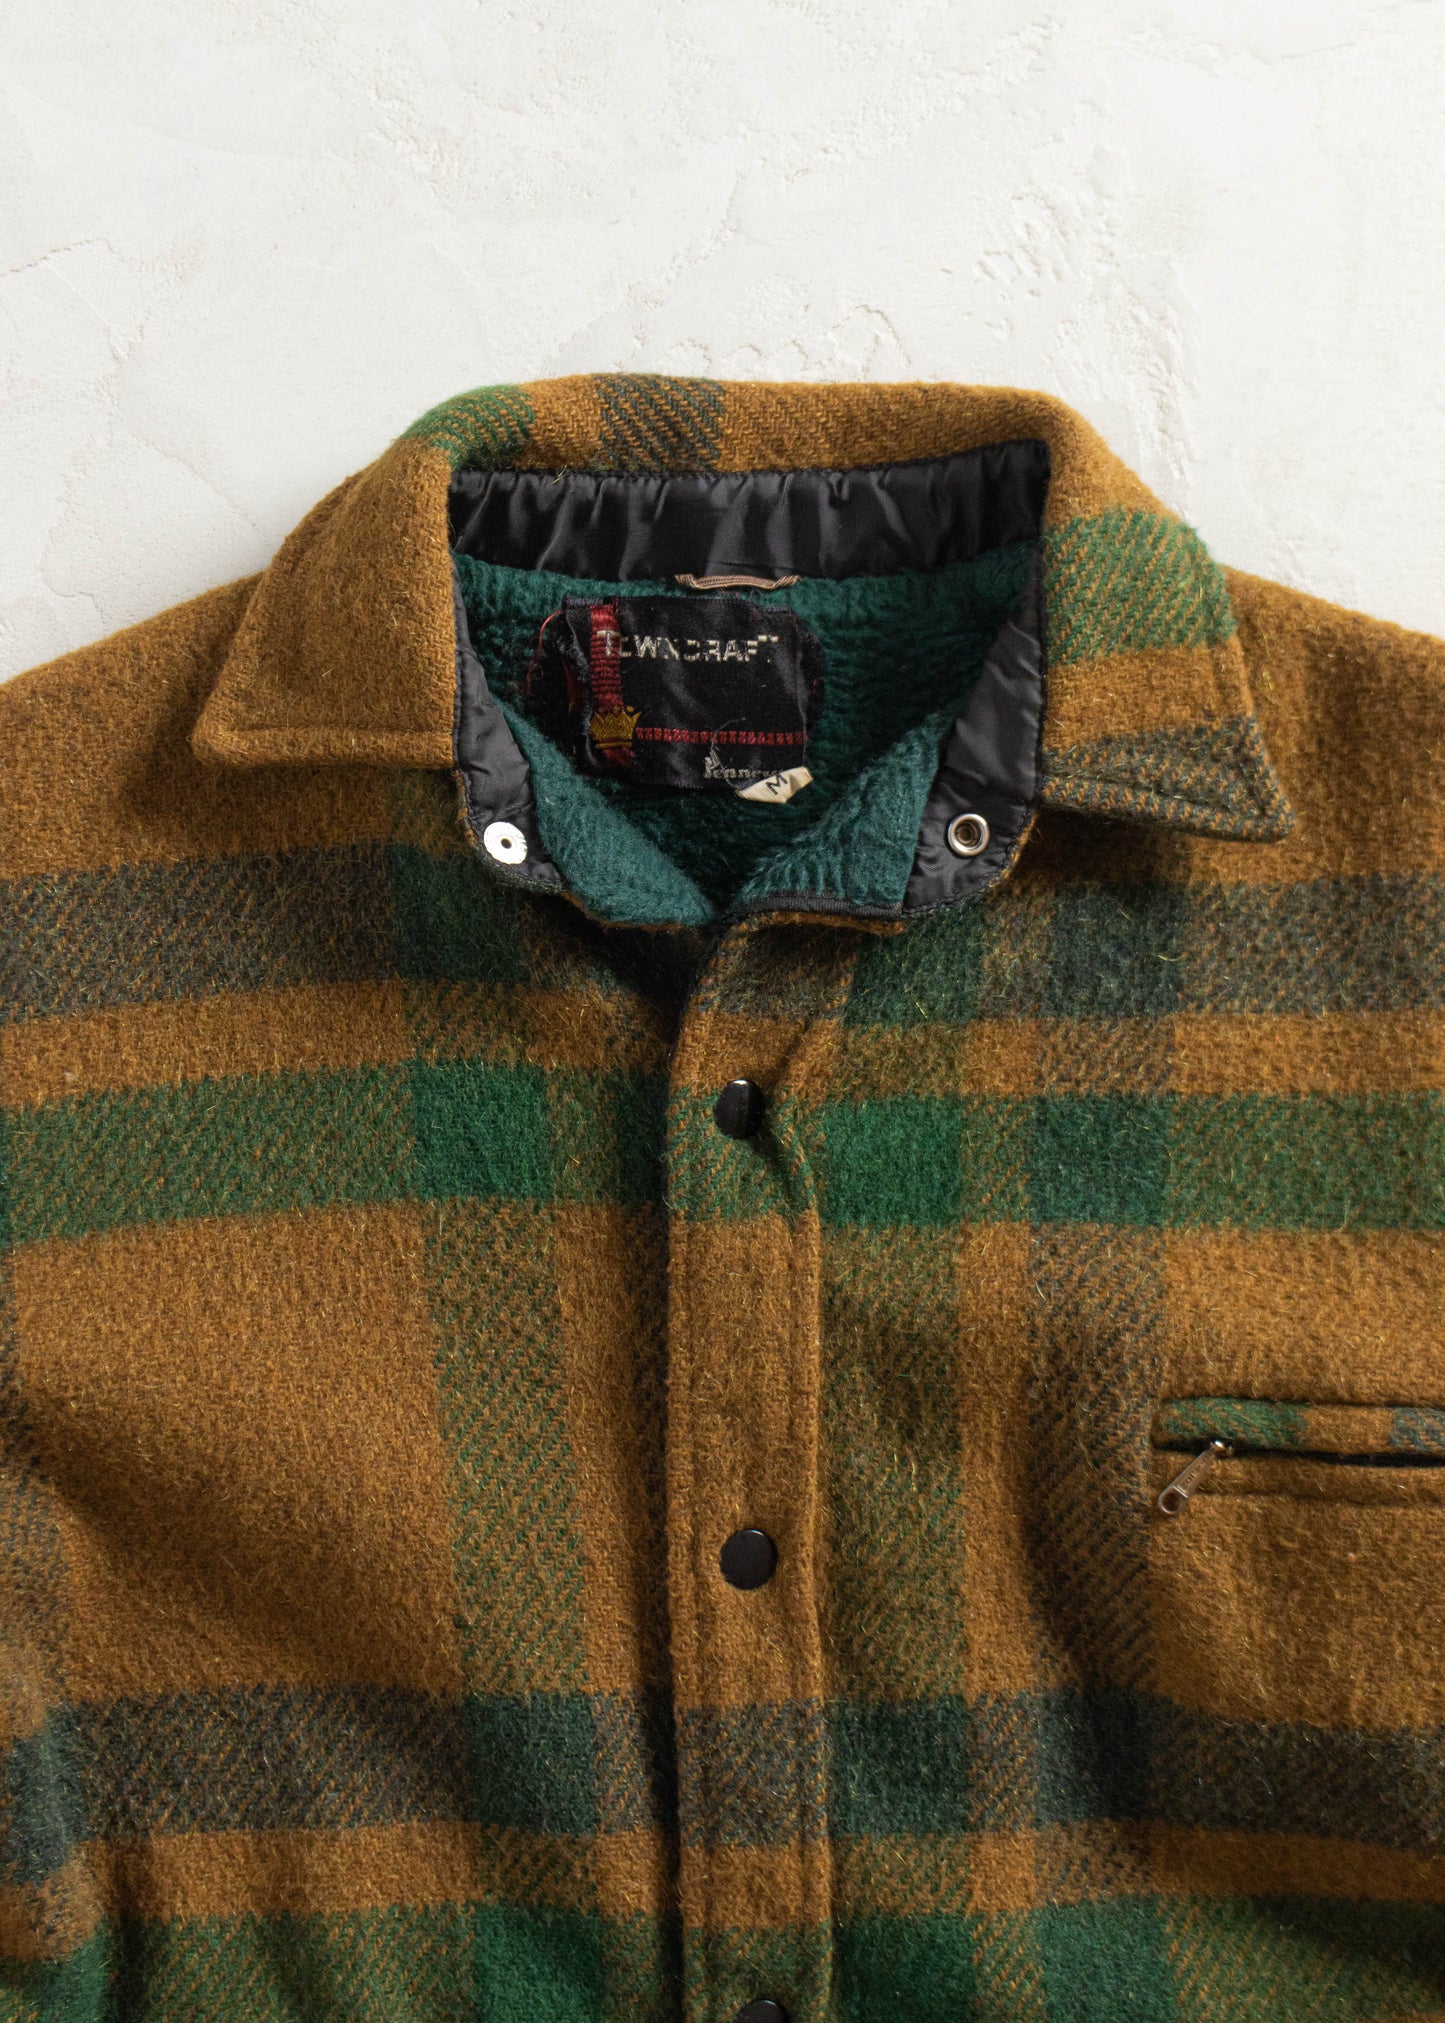 Vintage 1970s JC Penney Towncraft Wool Flannel Jacket Size M/L